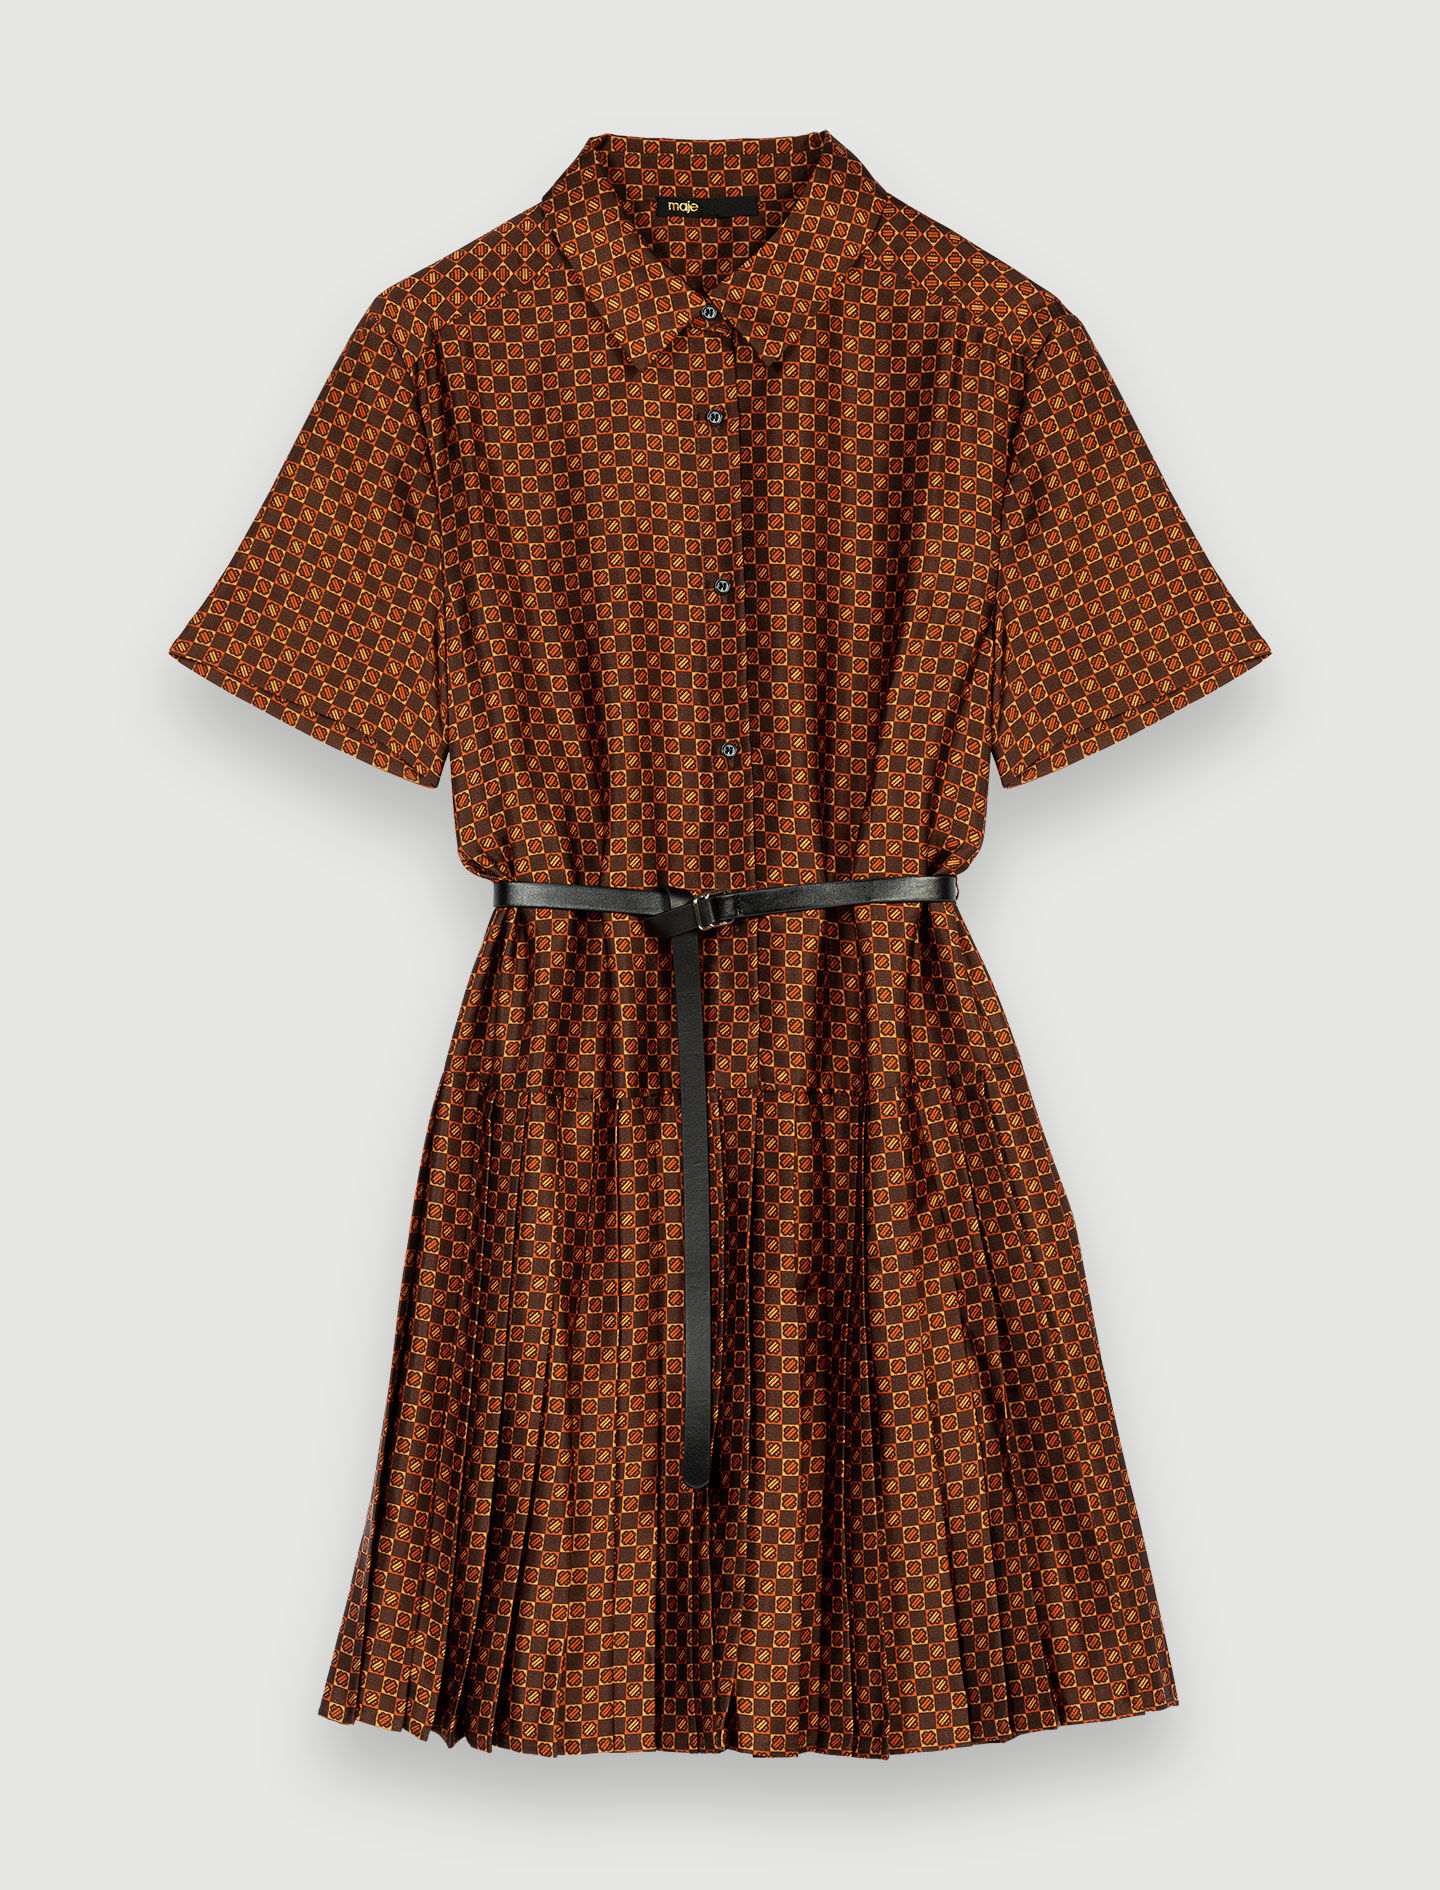 122RABLIC Shirt dress in printed, pleated satin - Dresses - Maje.com